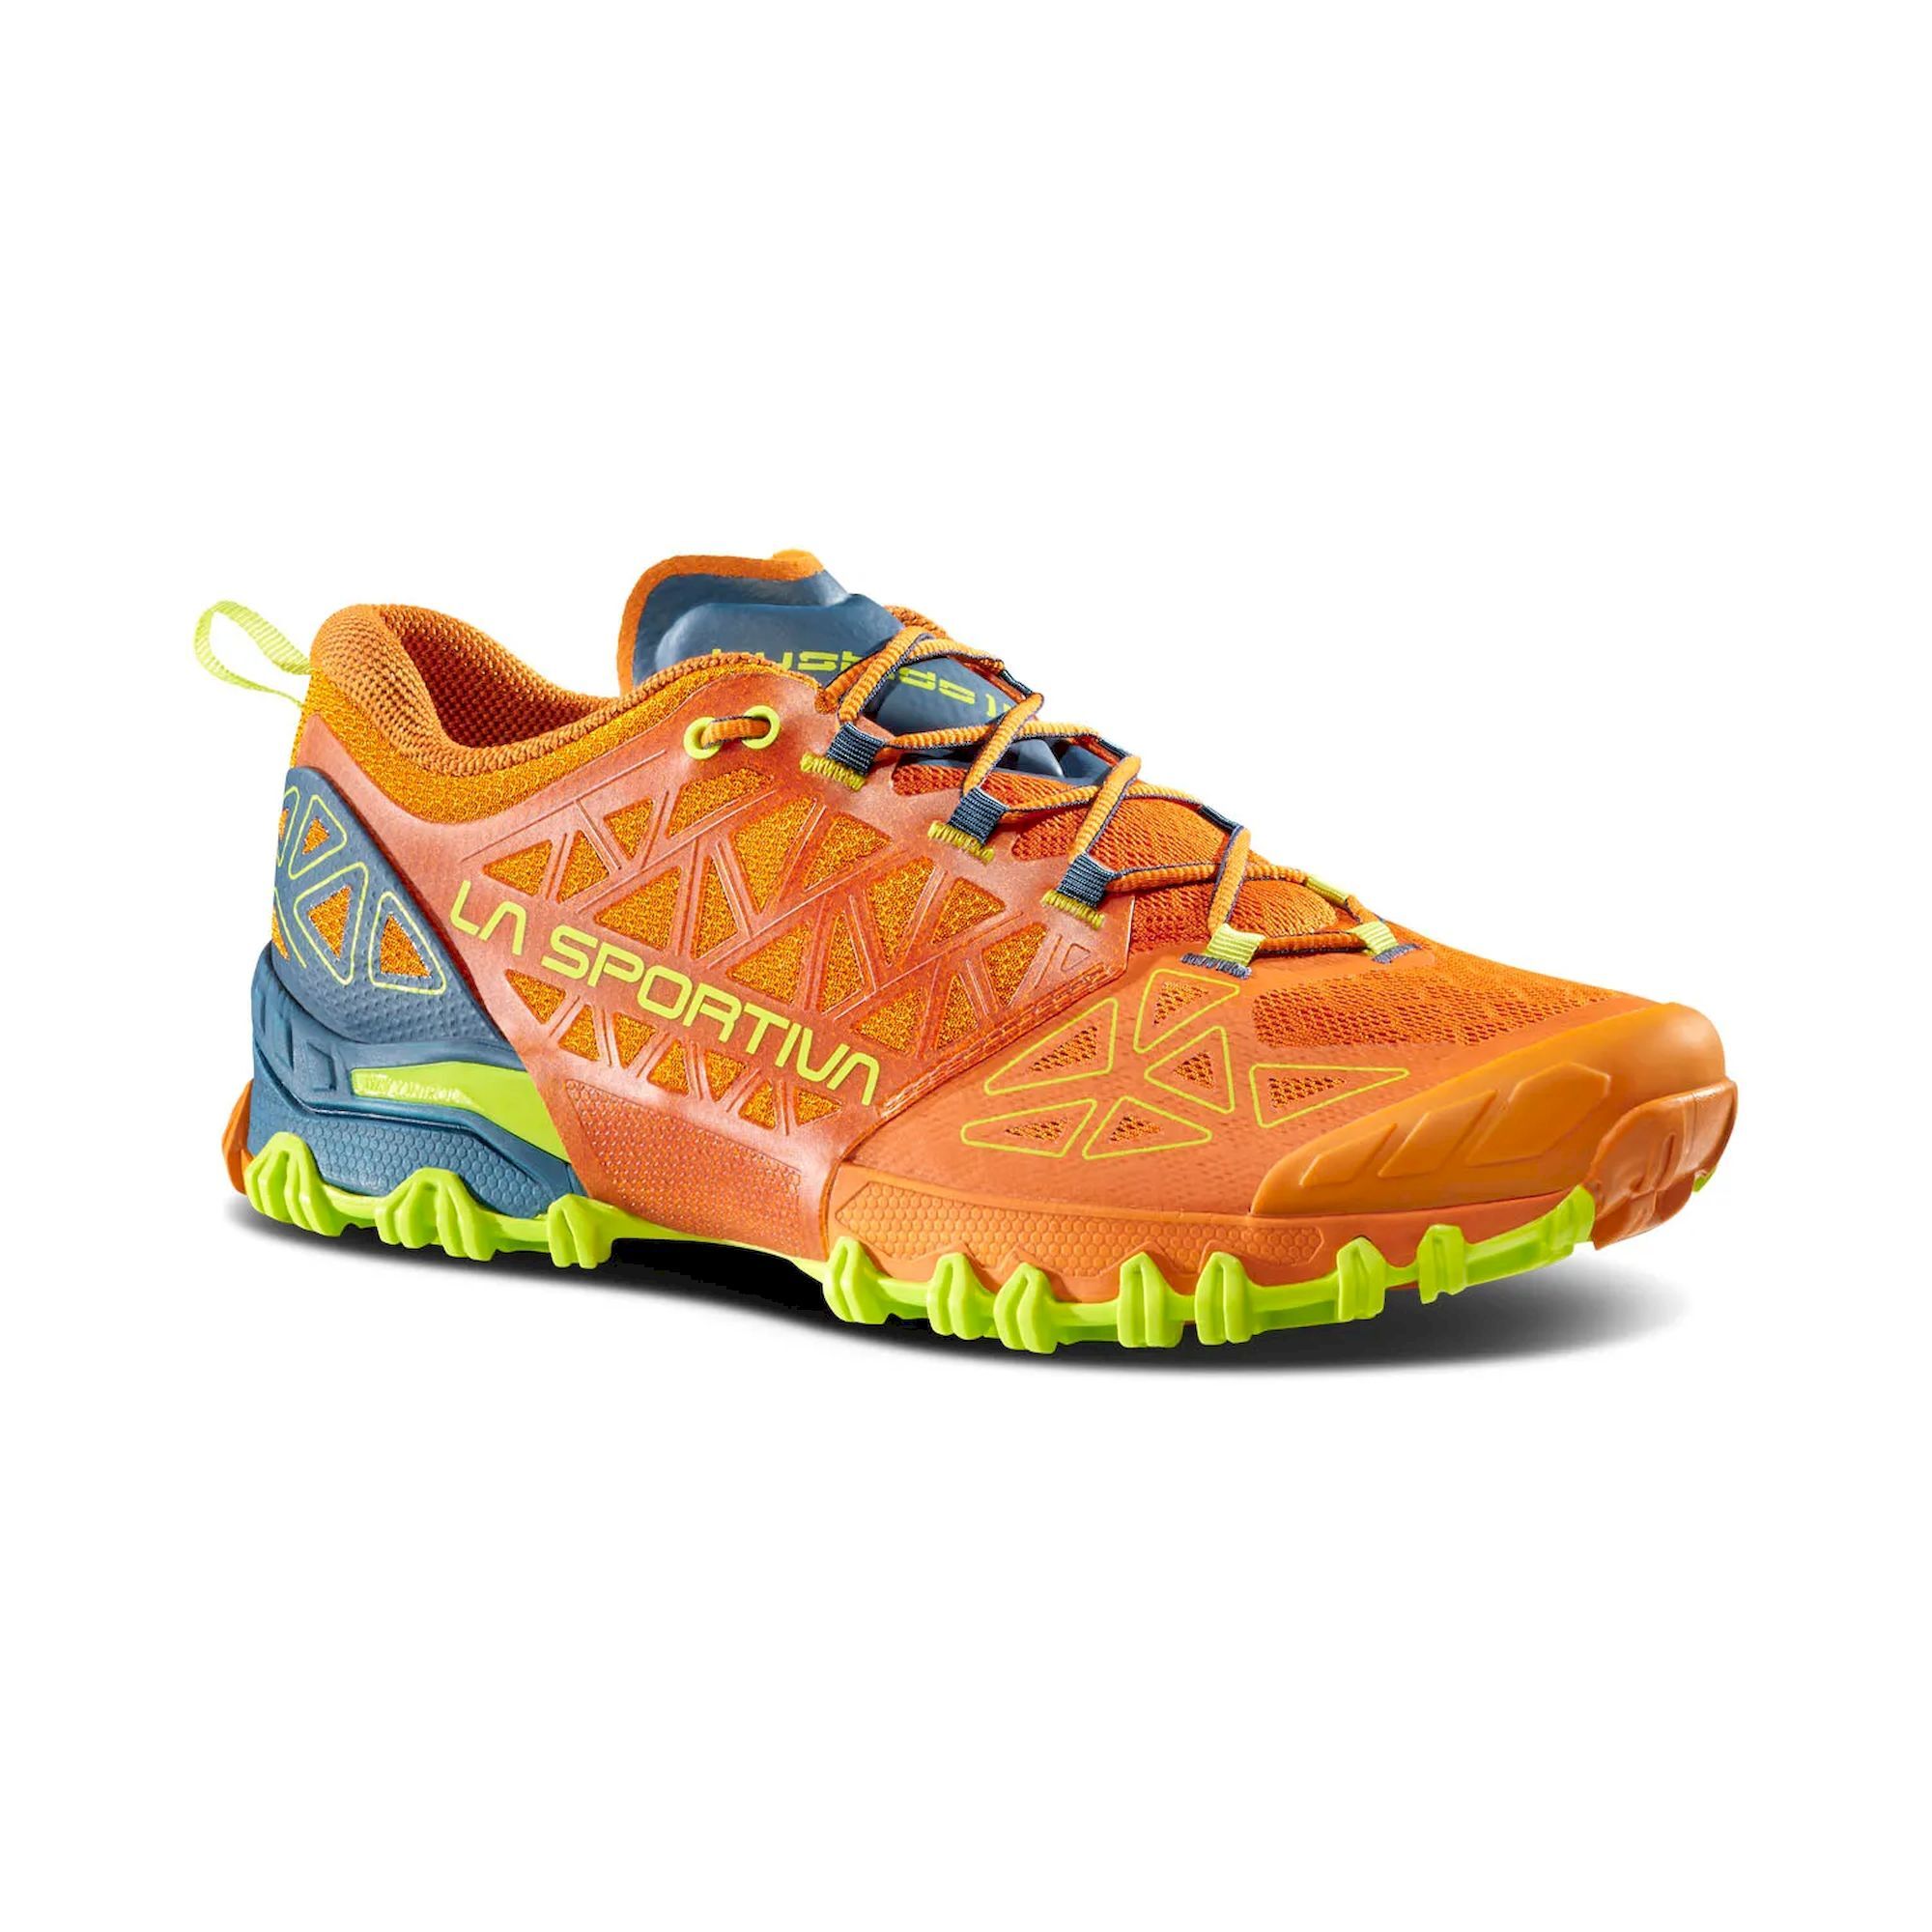 La Sportiva - Bushido II - Trail running shoes - Men's